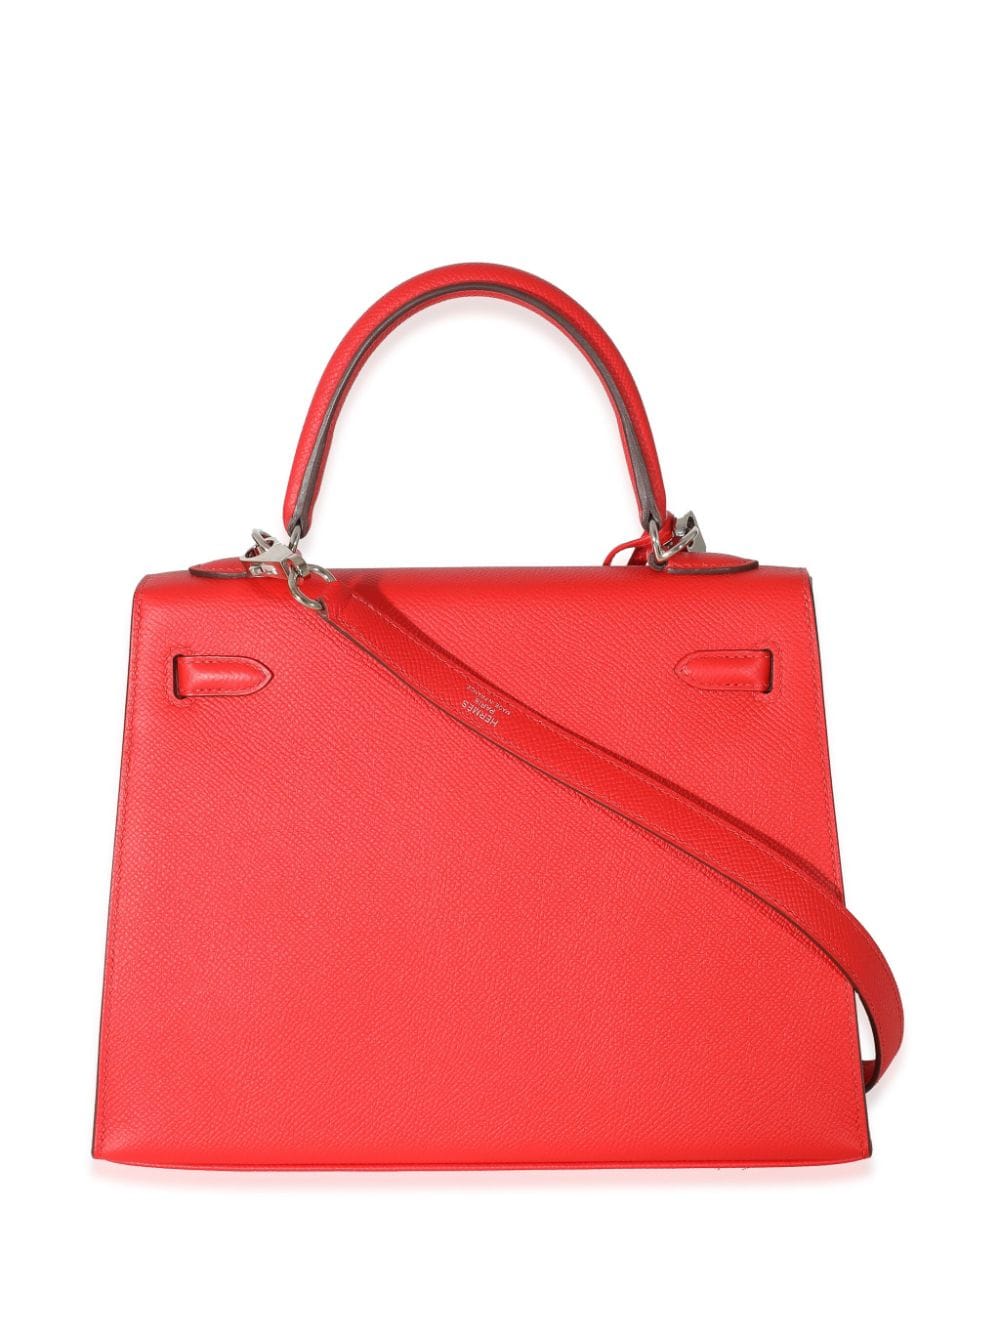 Image 2 of Hermès Pre-Owned 2019 Kelly 25 Sellier two-way handbag